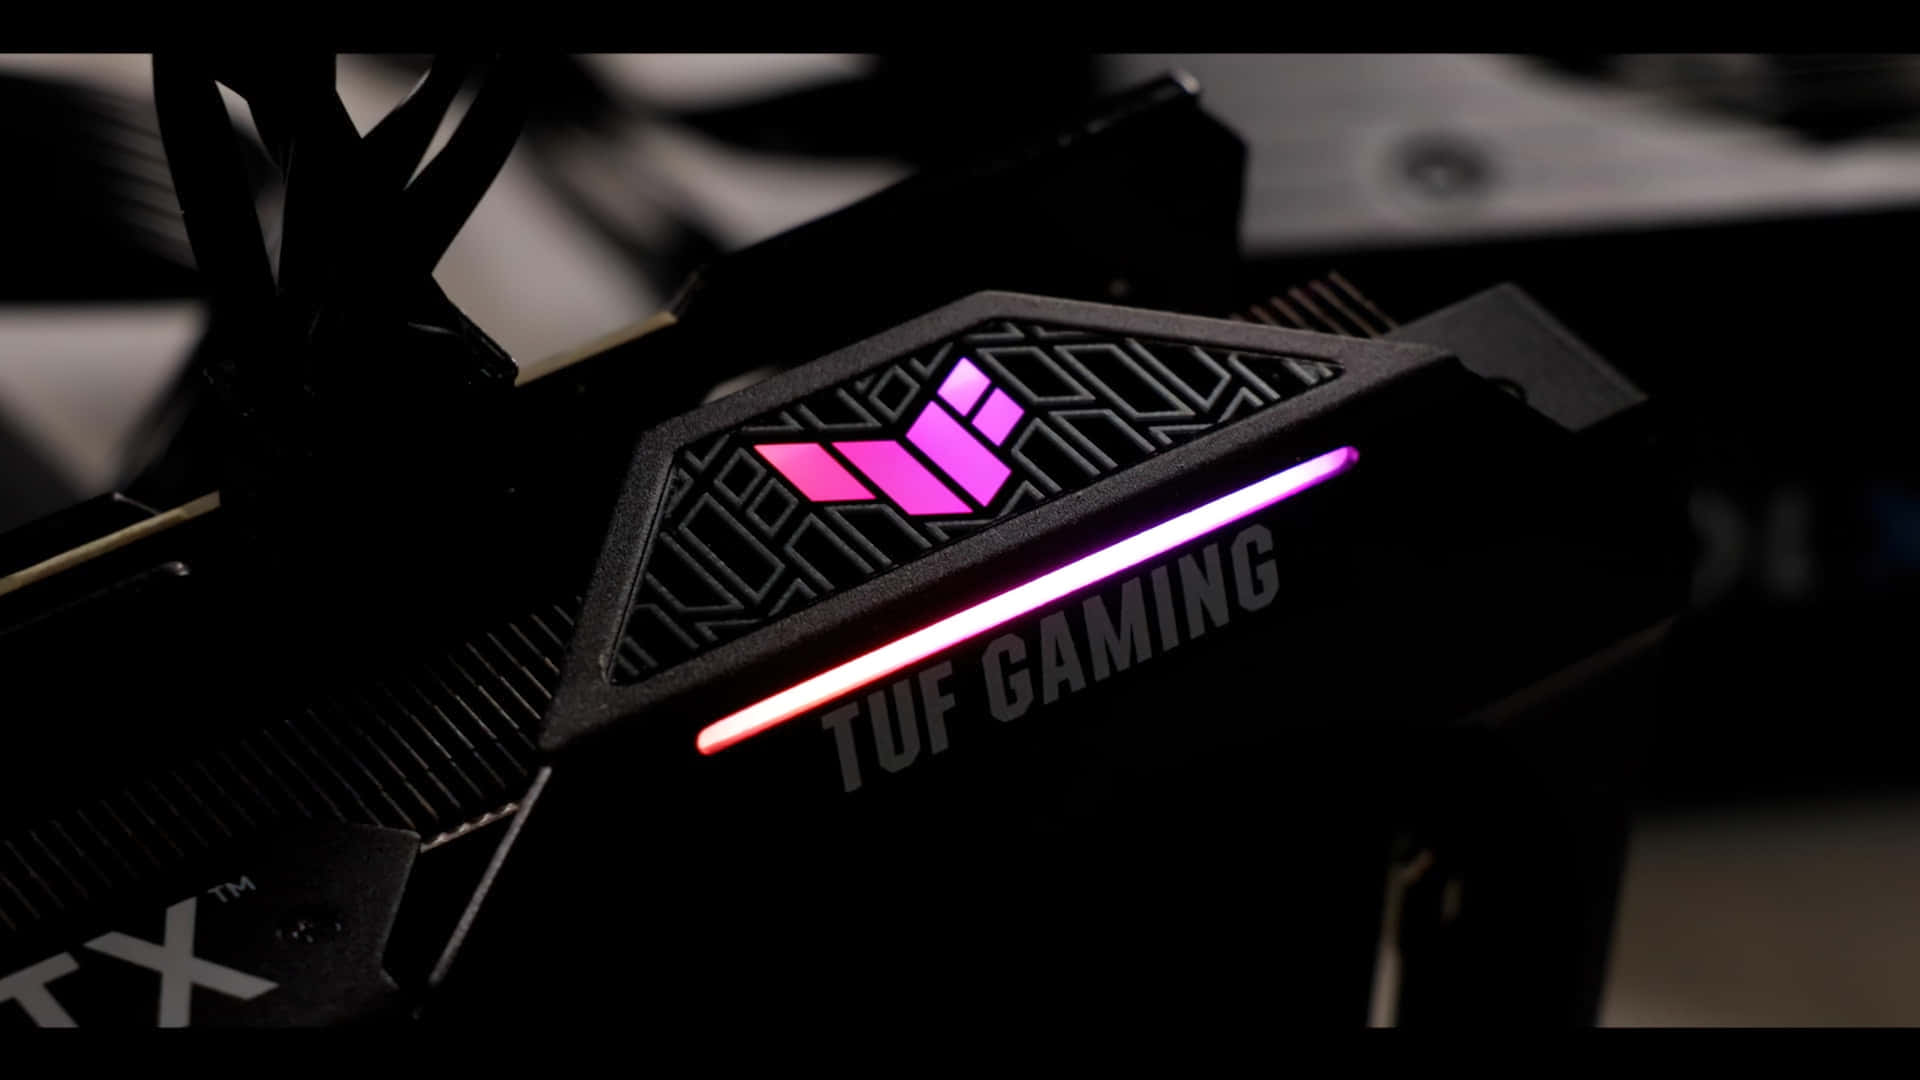 Asus T U F Gaming Graphics Card Illumination Background